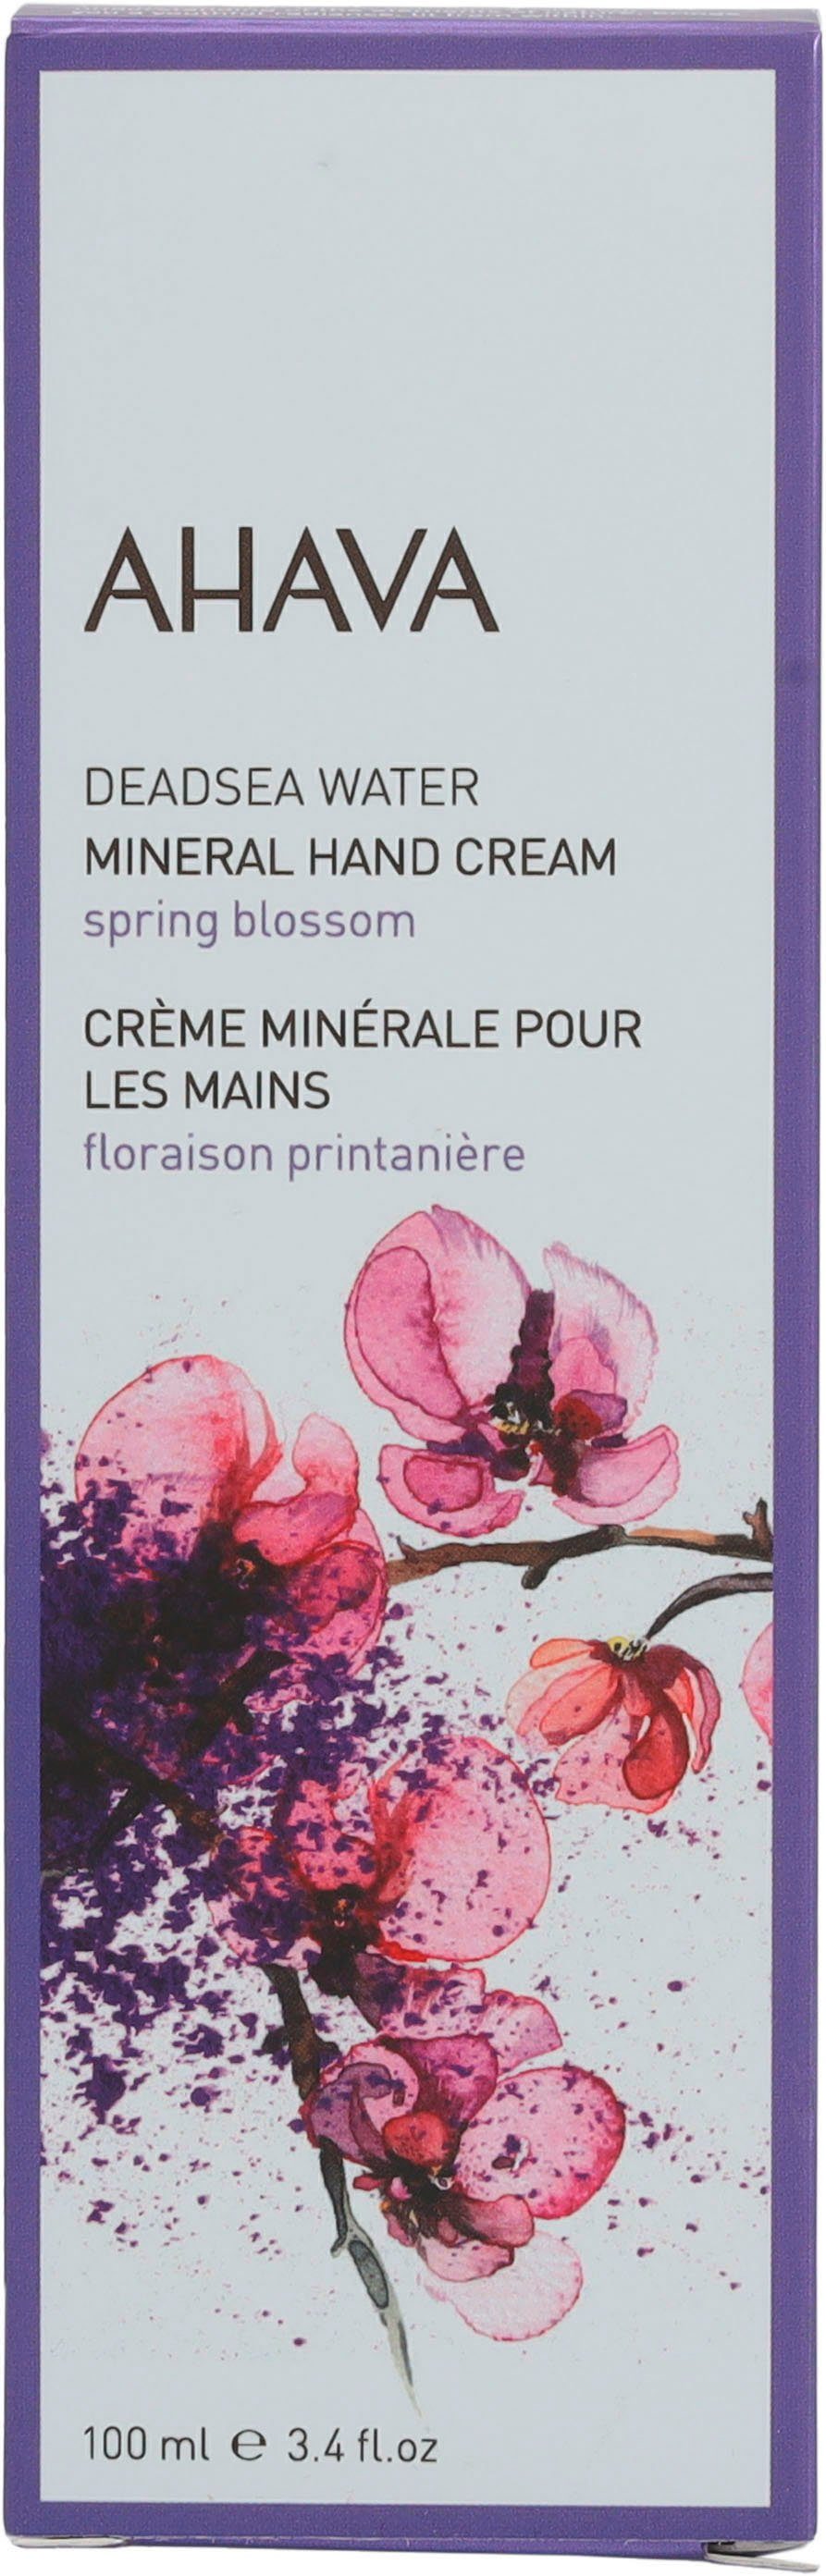 Handcreme Hand Mineral AHAVA Spring Cream Blossom Water Deadsea